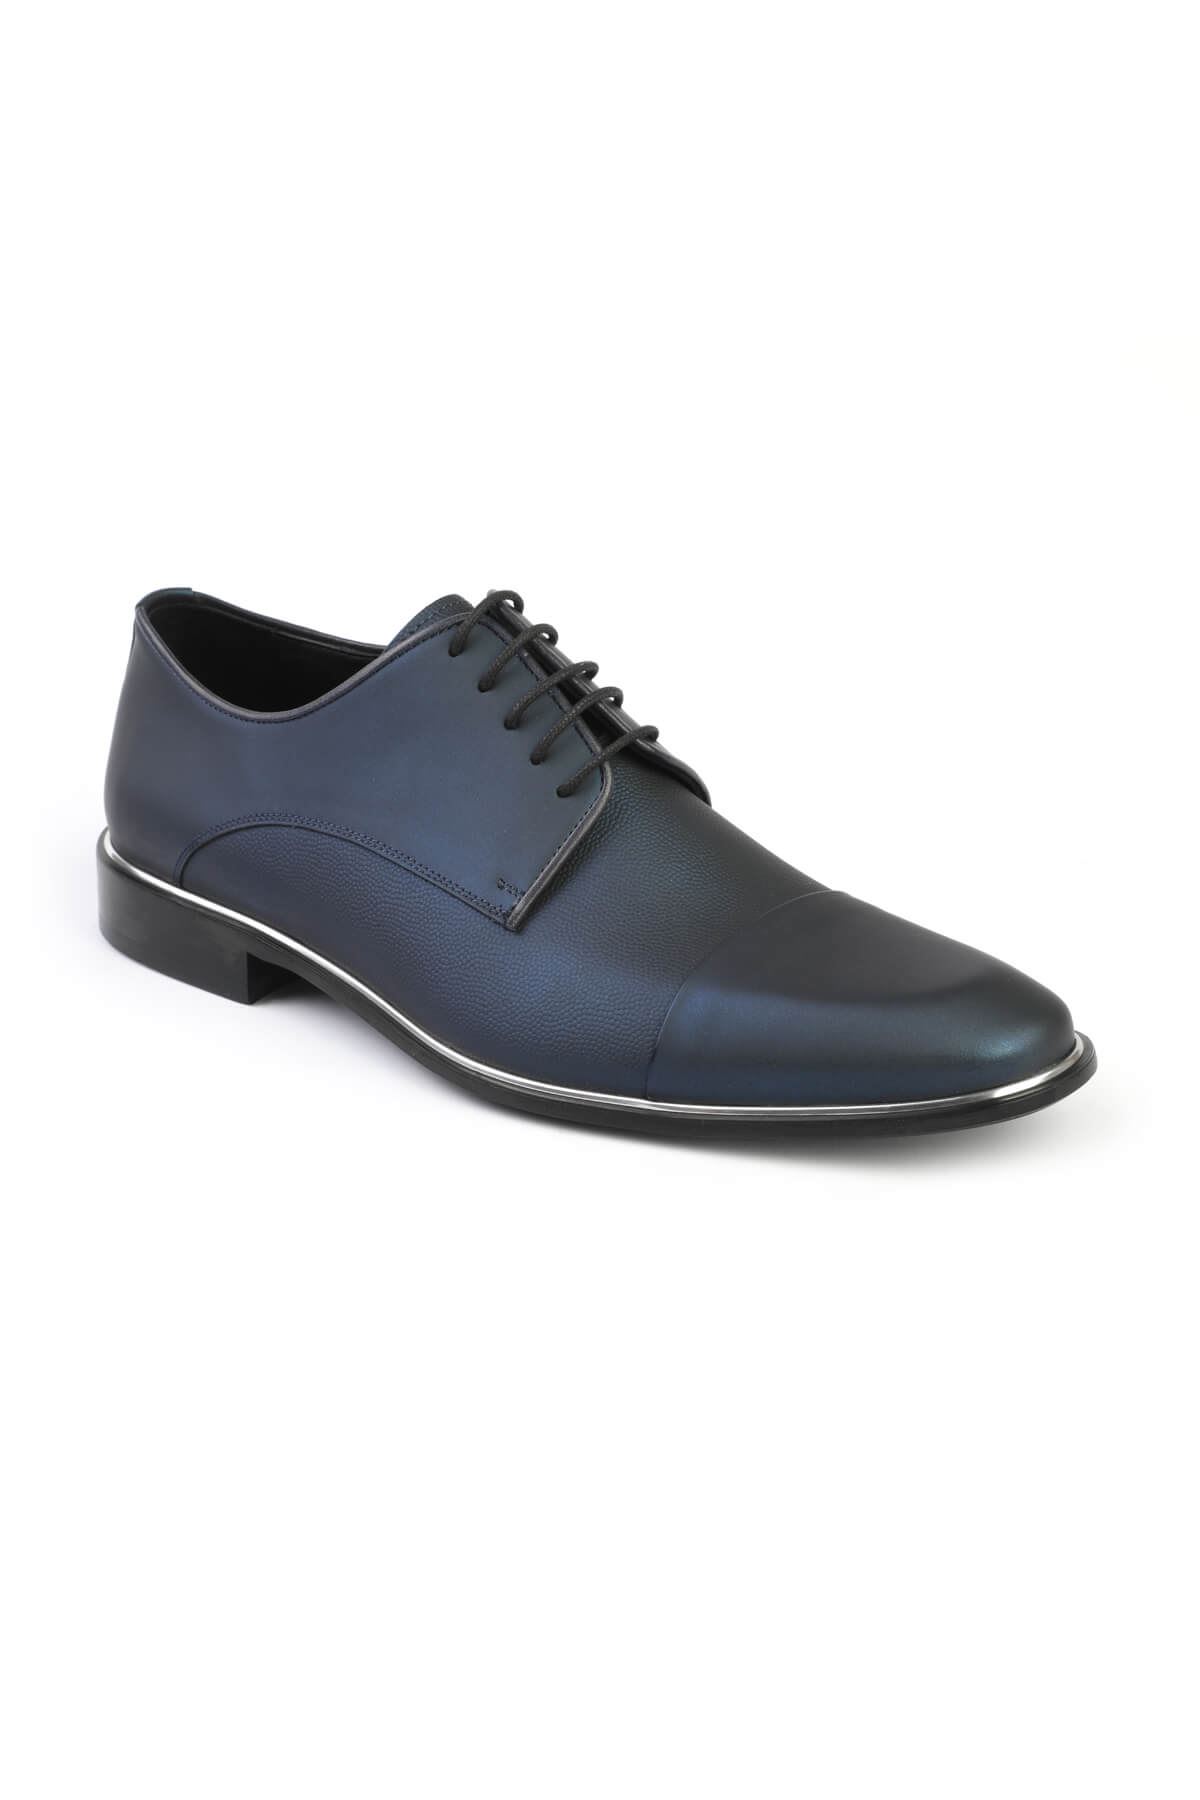 Libero 2474 Navy Blue Classic Shoes